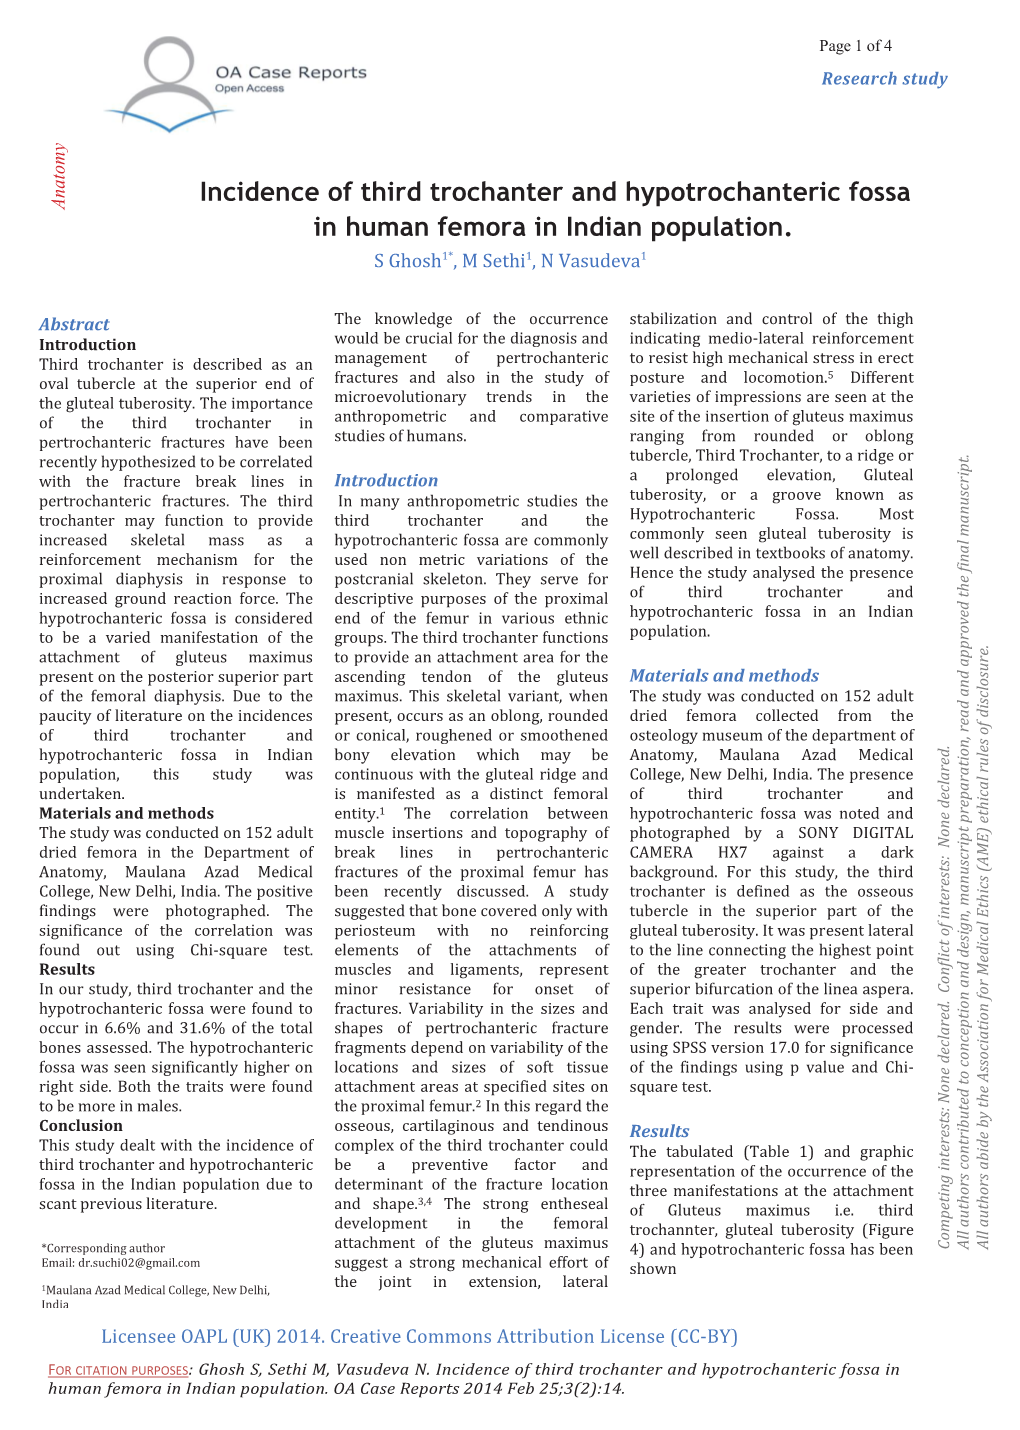 Incidence of Third Trochanter and Hypotrochanteric Fossa in Human Femora in Indian Population